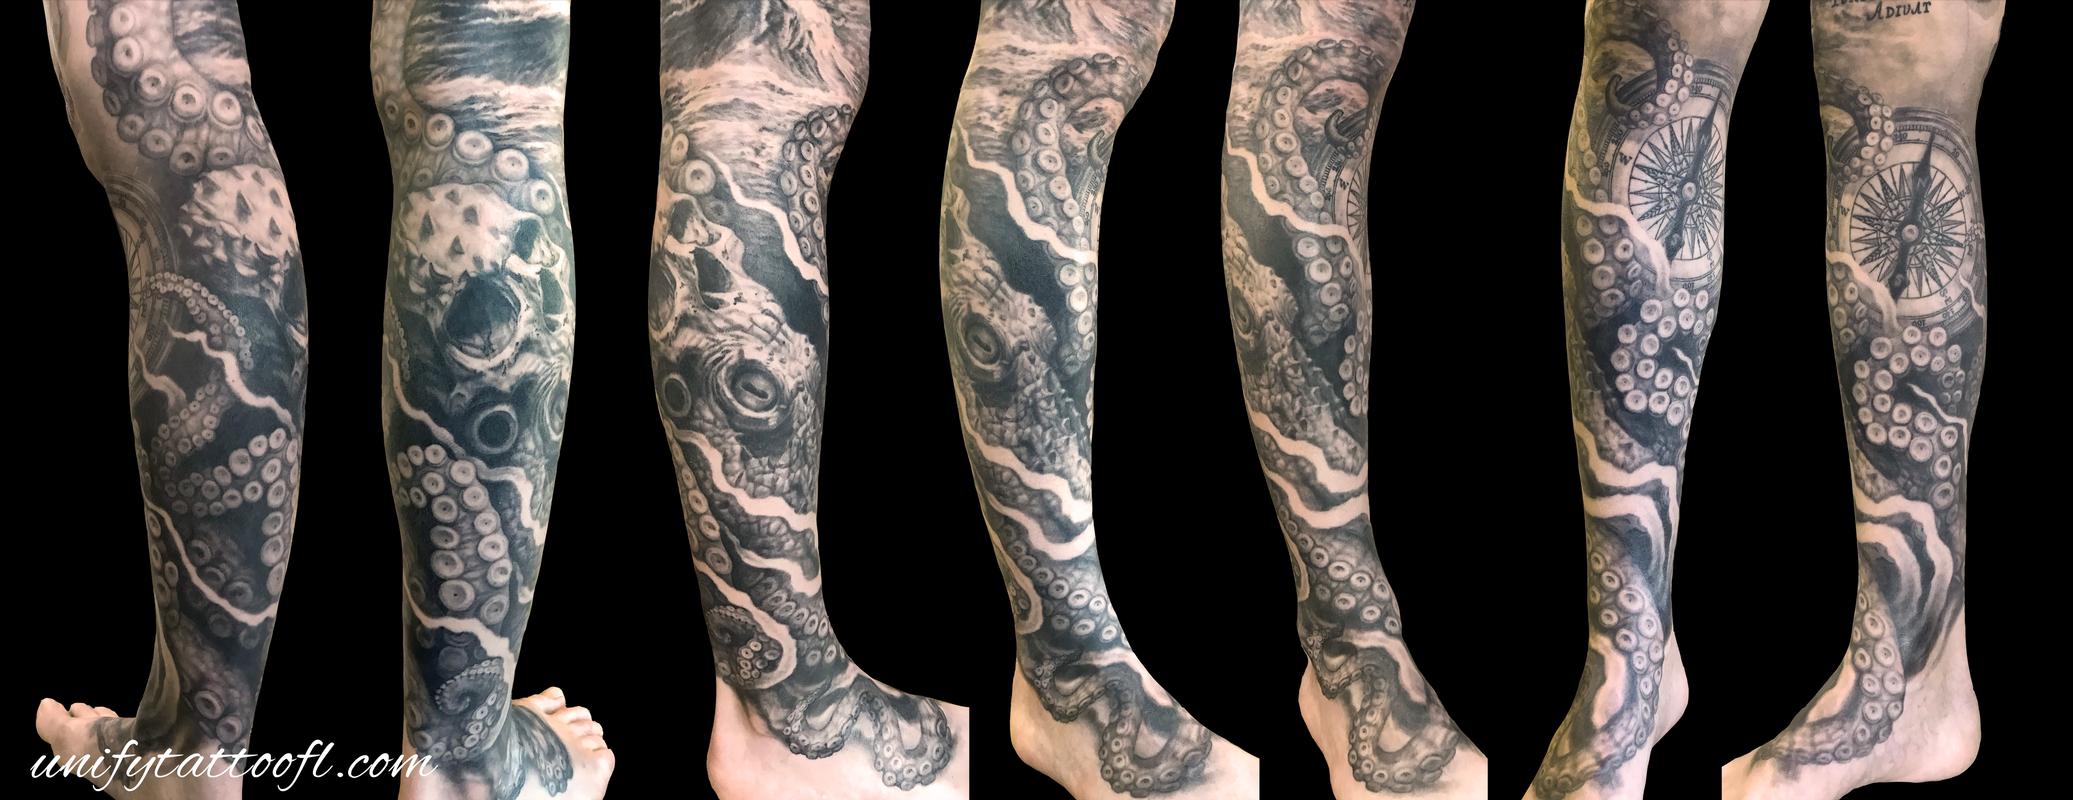 Unify Tattoo Company : Tattoos : Body Part Leg Sleeve : Octopus Tattoo